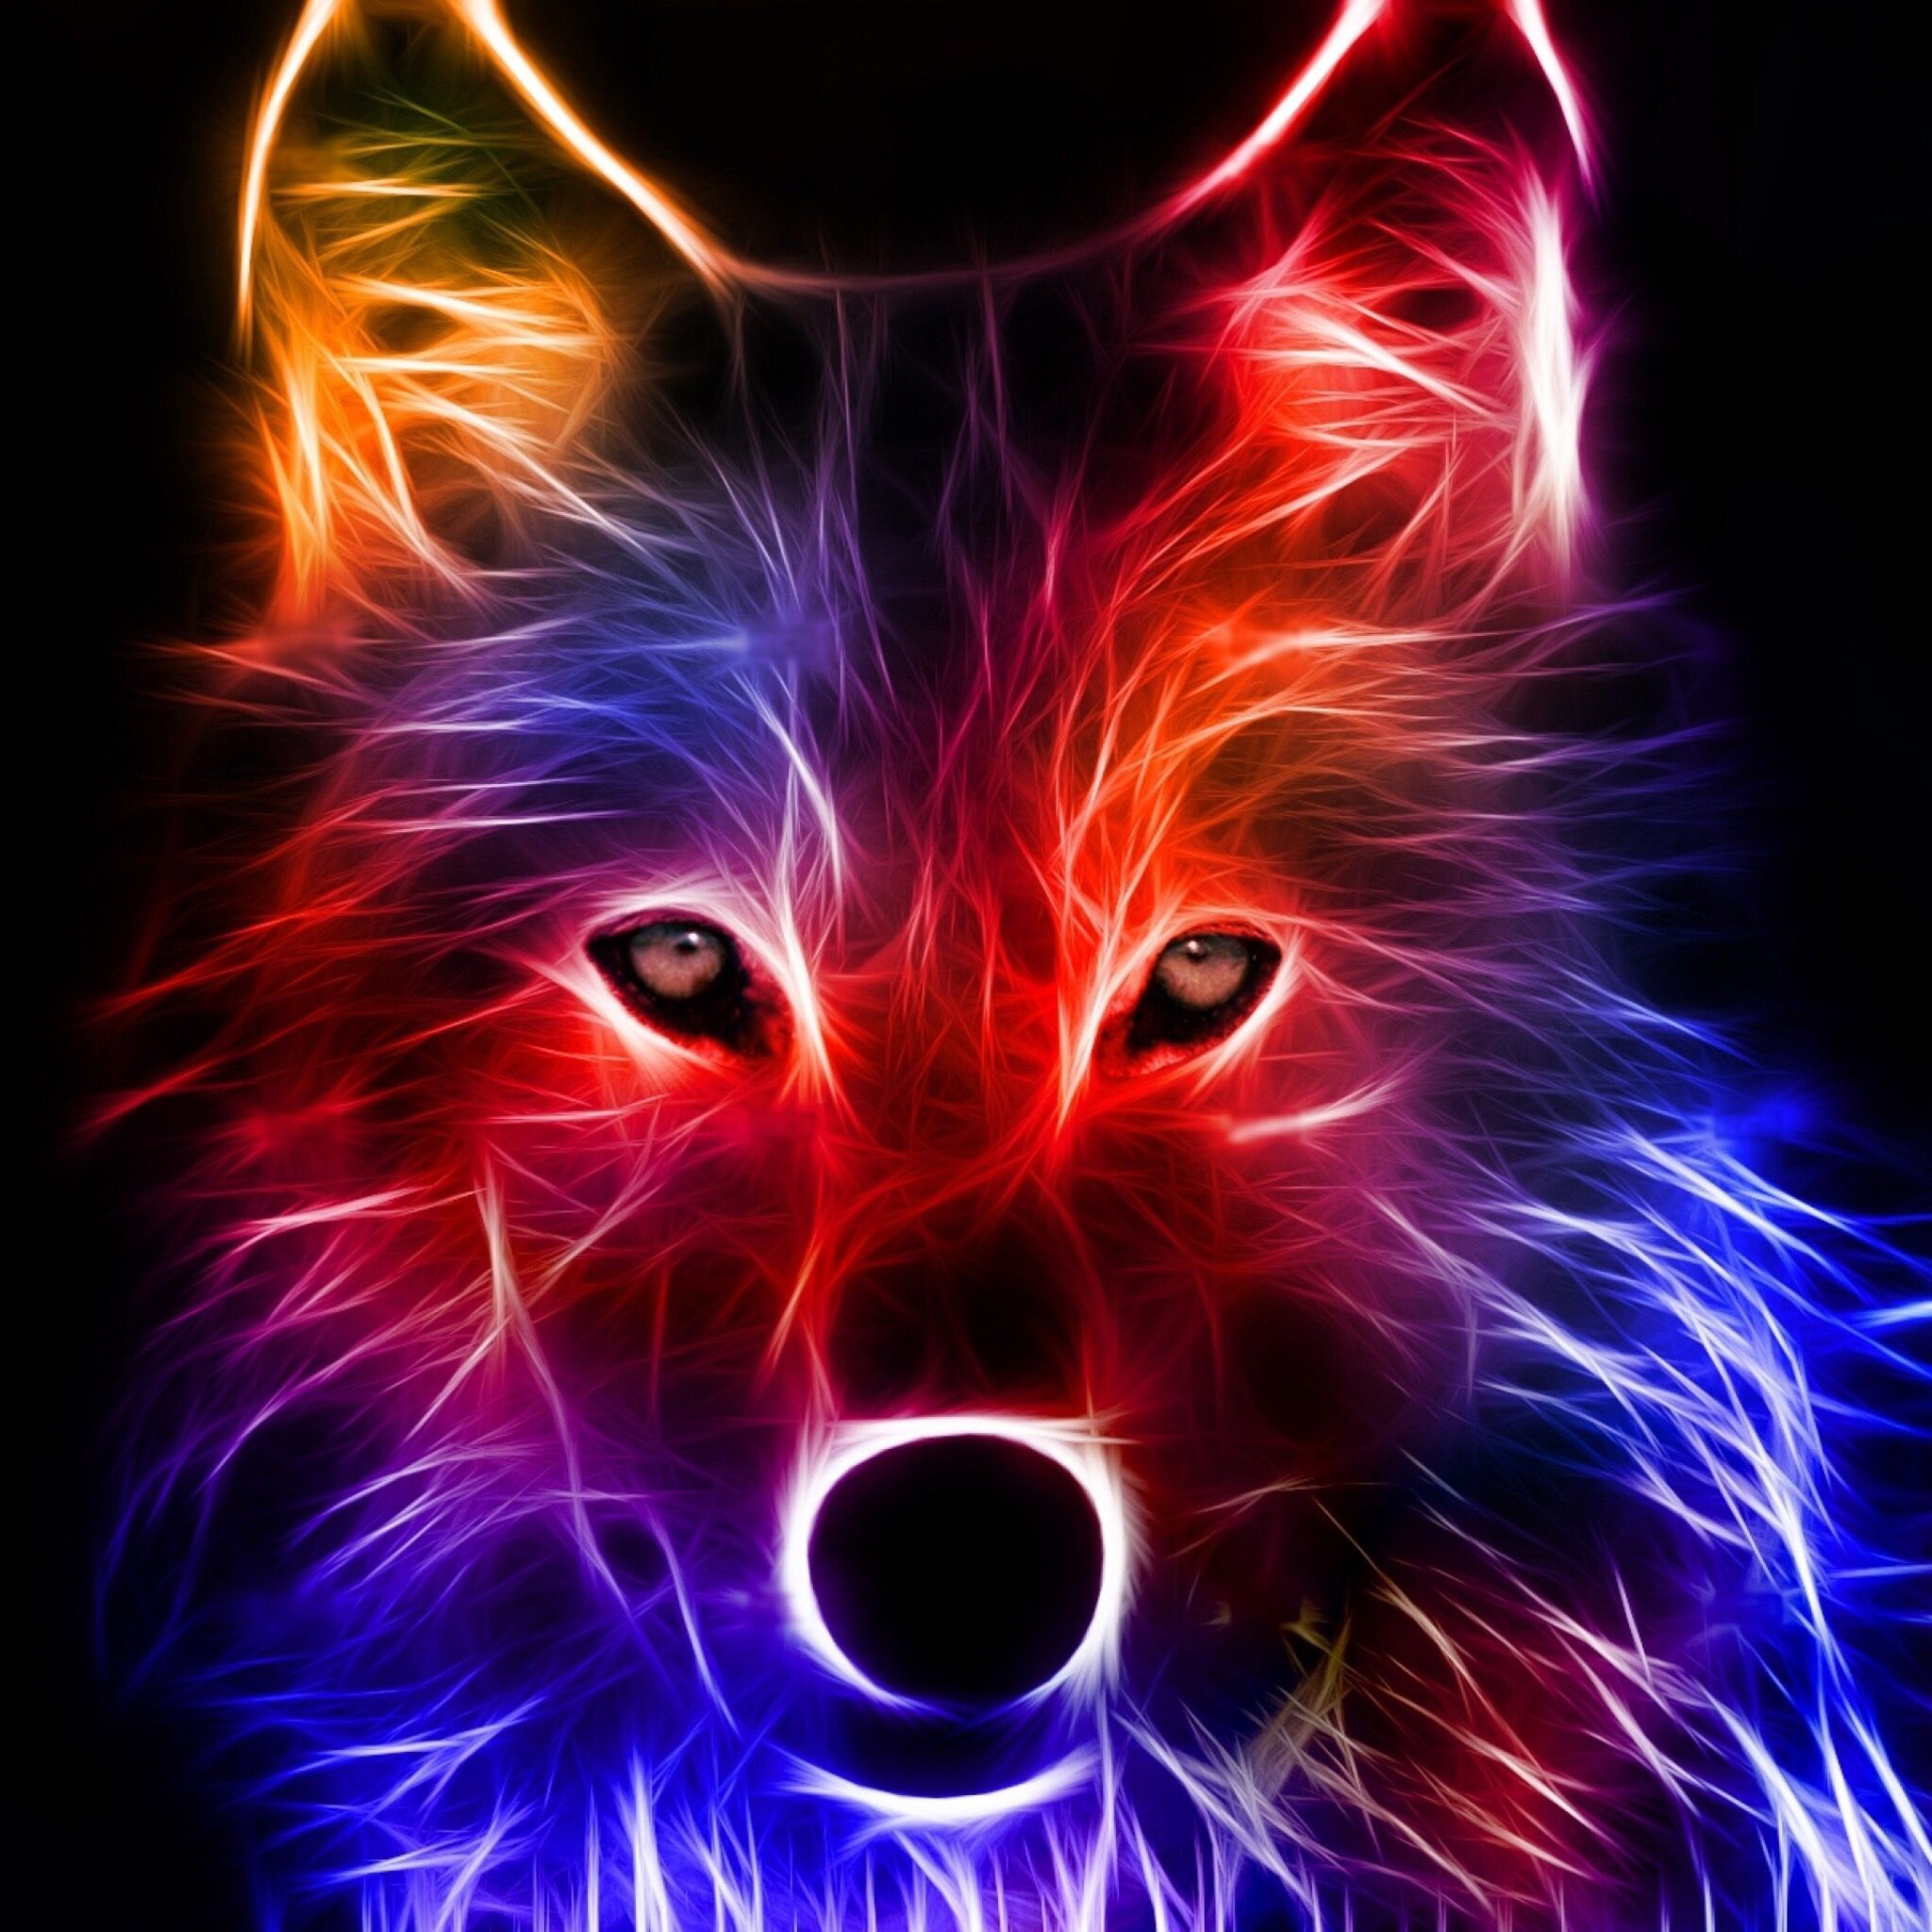  Coole Neon Hintergrundbild 2048x2048. Cool Neon Wolves Wallpaper